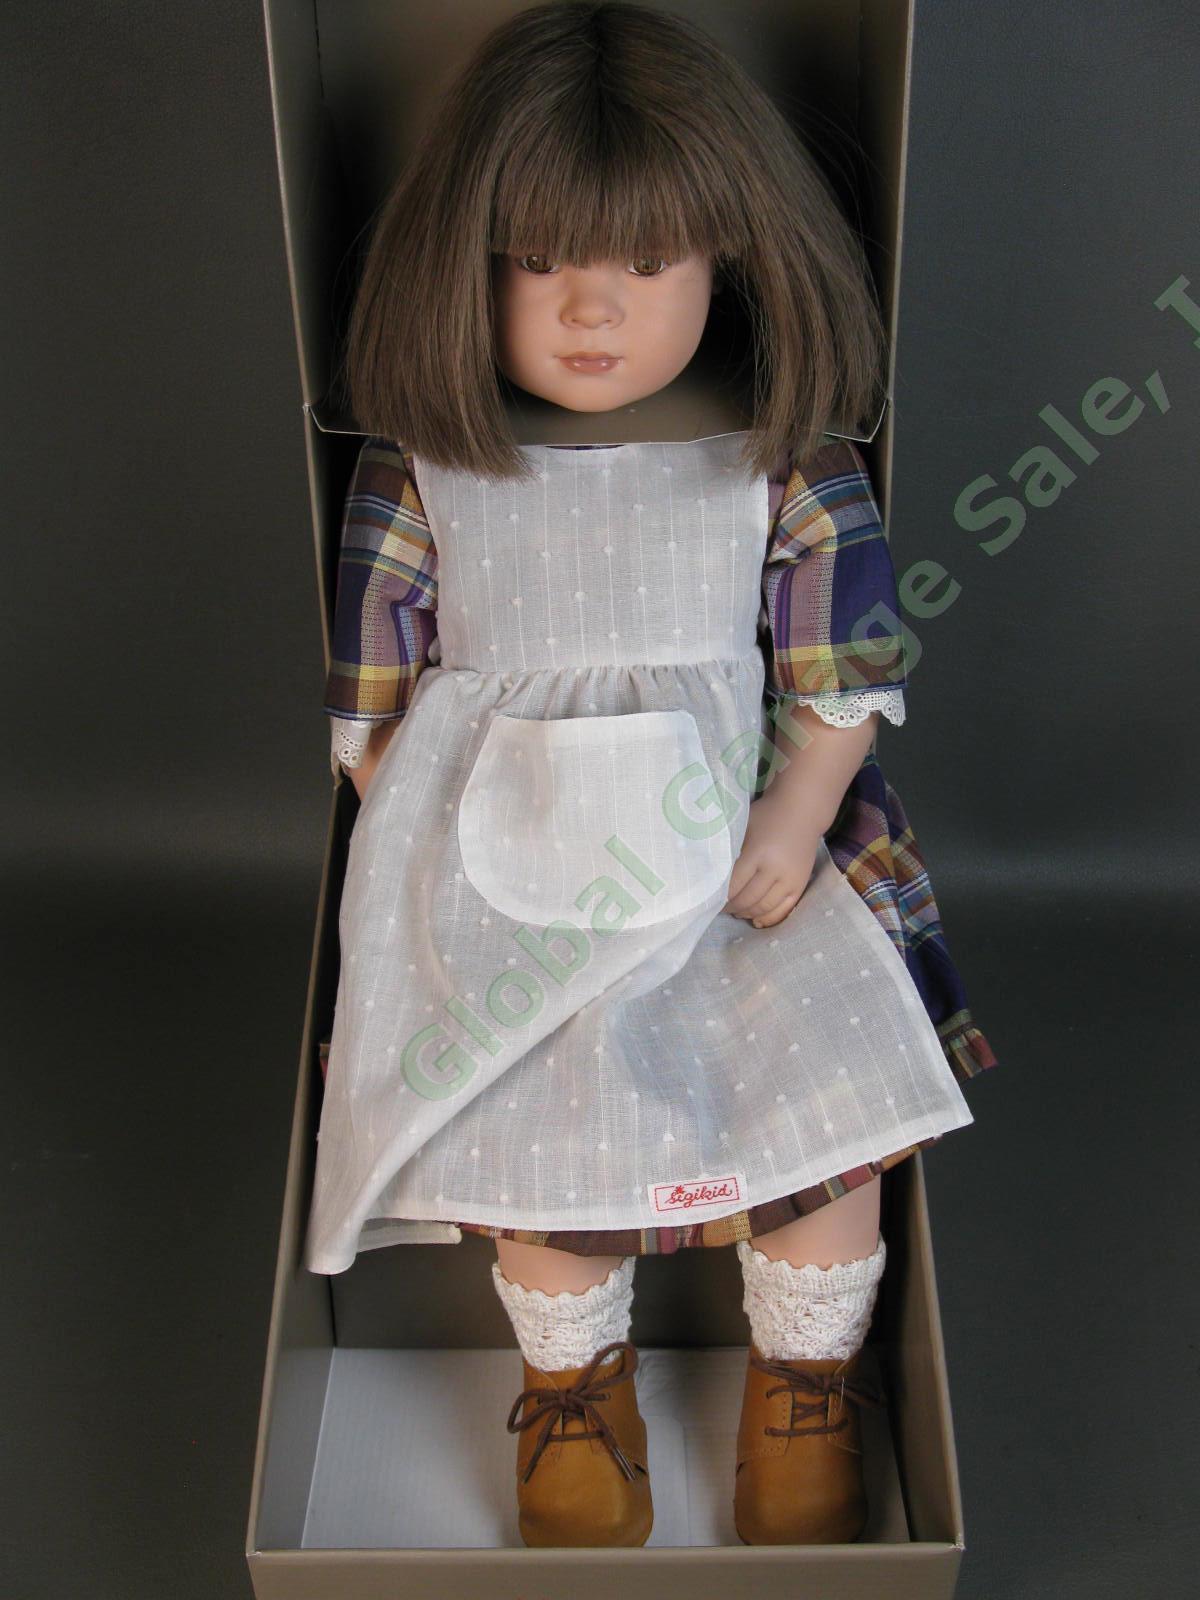 1991 Sabine Esche SIGIKID Jill II Artist Vinyl Doll 24503 Limited Edition COA NR 1